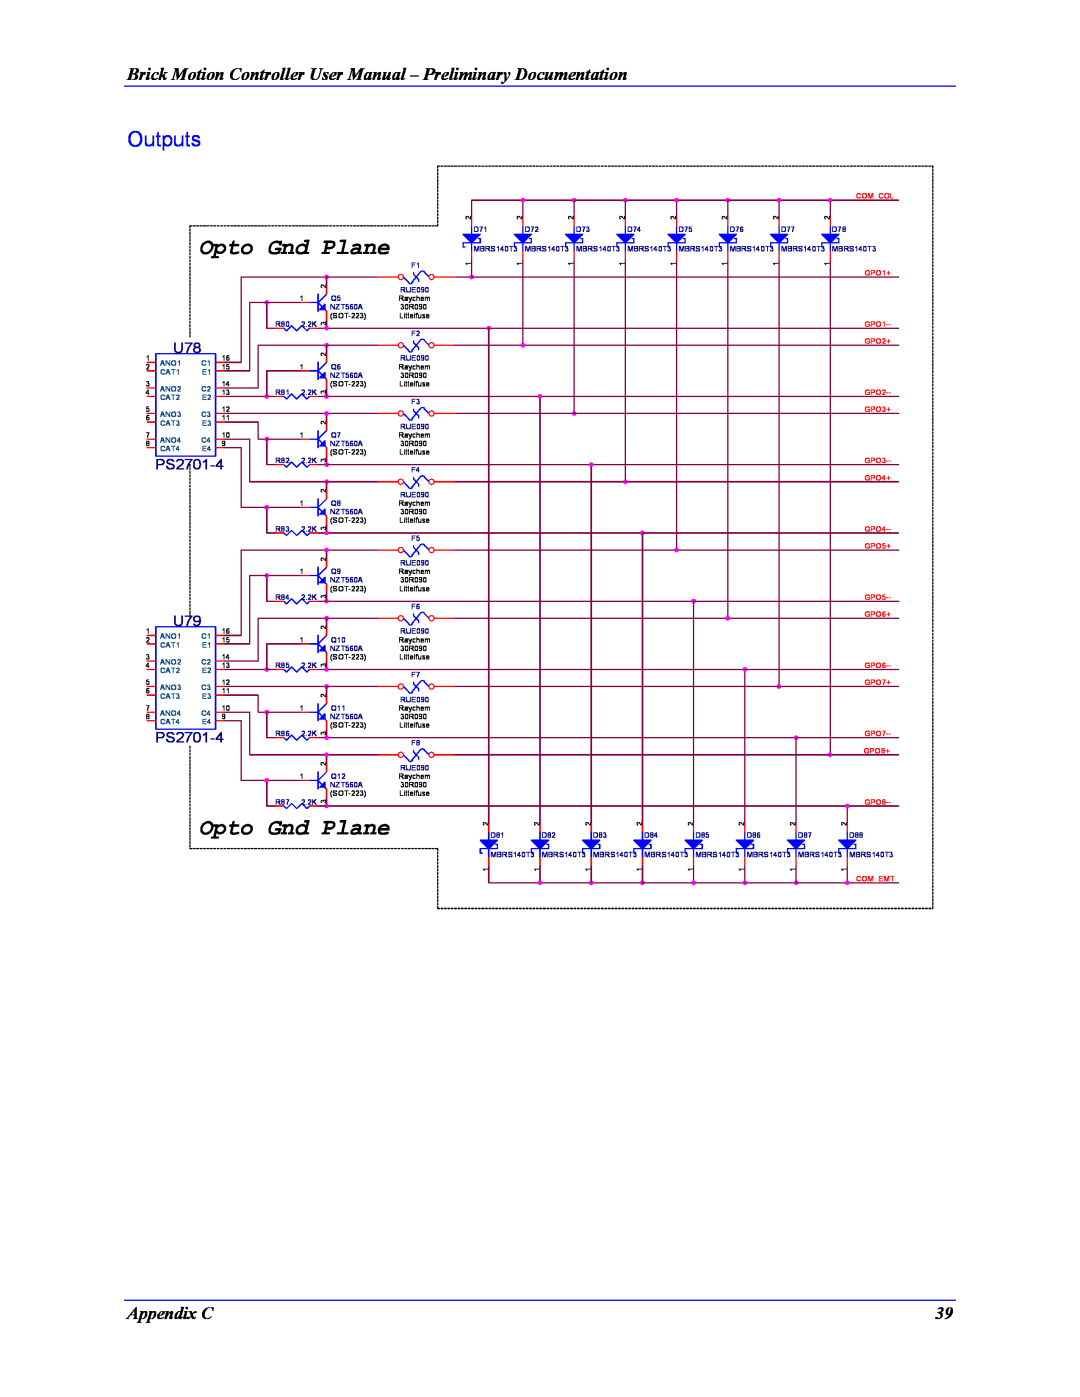 Delta Tau 5xx-603869-xUxx Outputs, Opto Gnd Plane, Brick Motion Controller User Manual - Preliminary Documentation, Comcol 